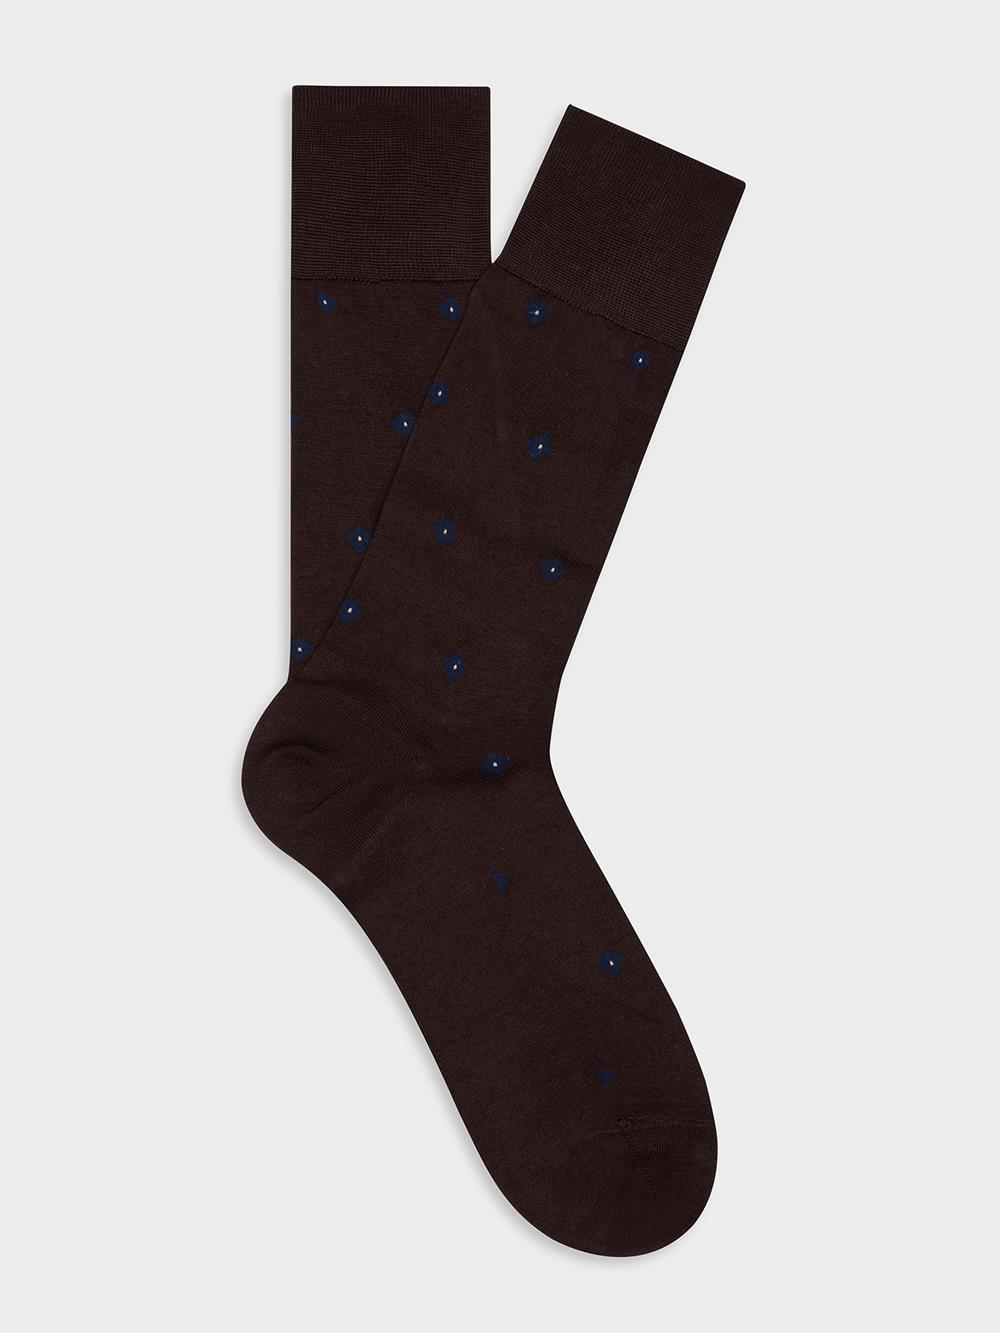 Barney chocolate socks with jacquard pattern